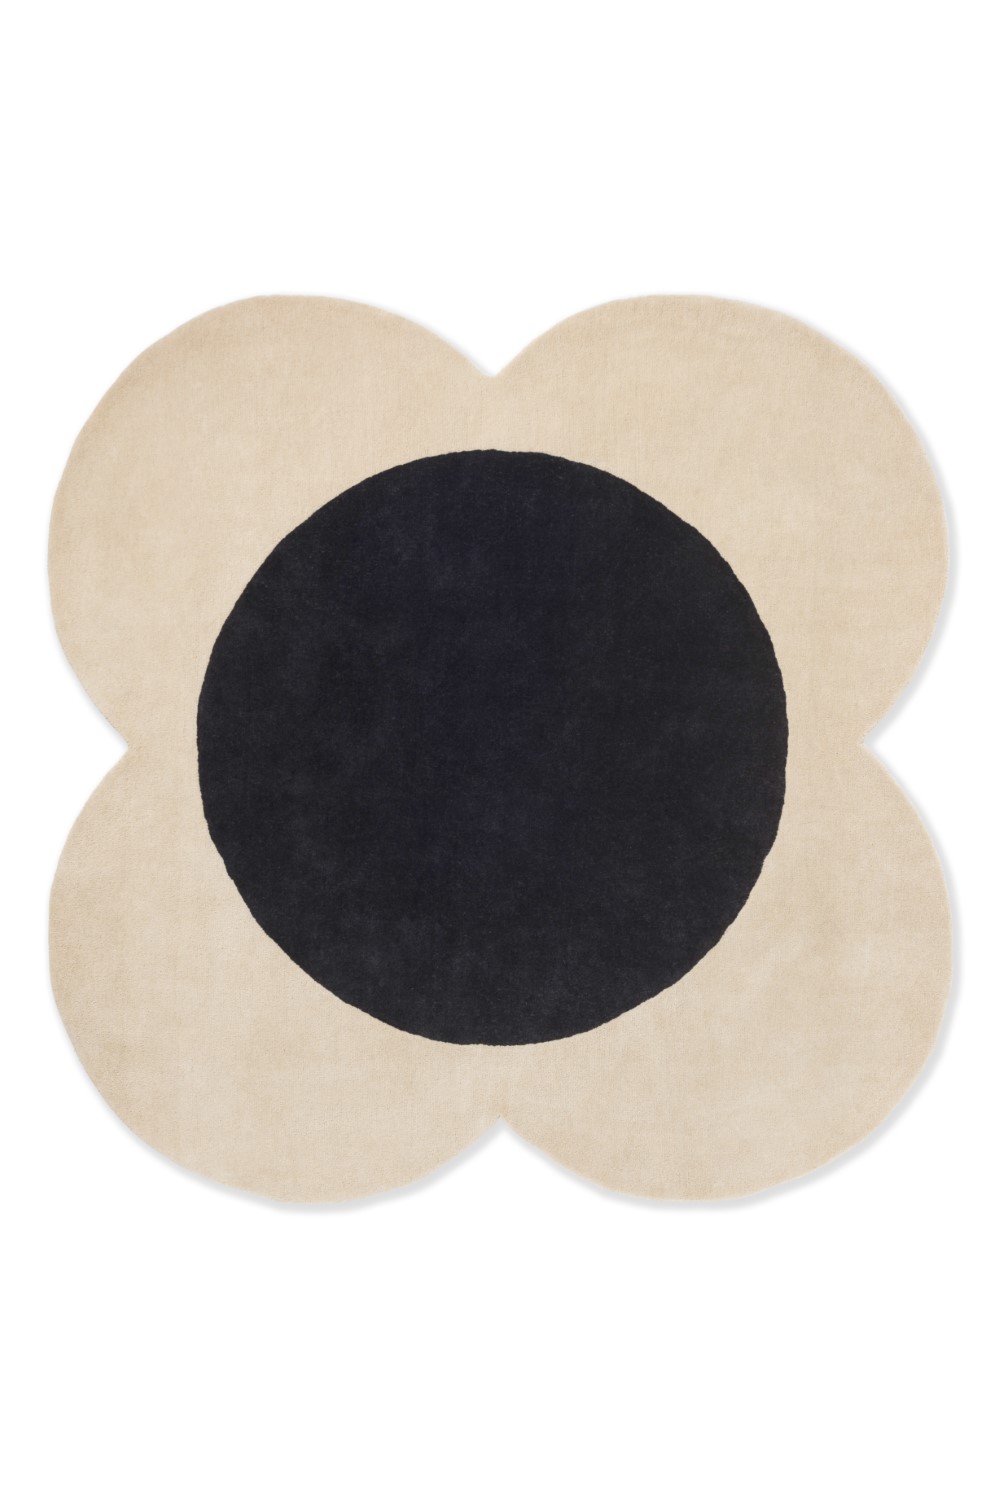 orla-kiely-rug-flower-spot-ecru-black-158409